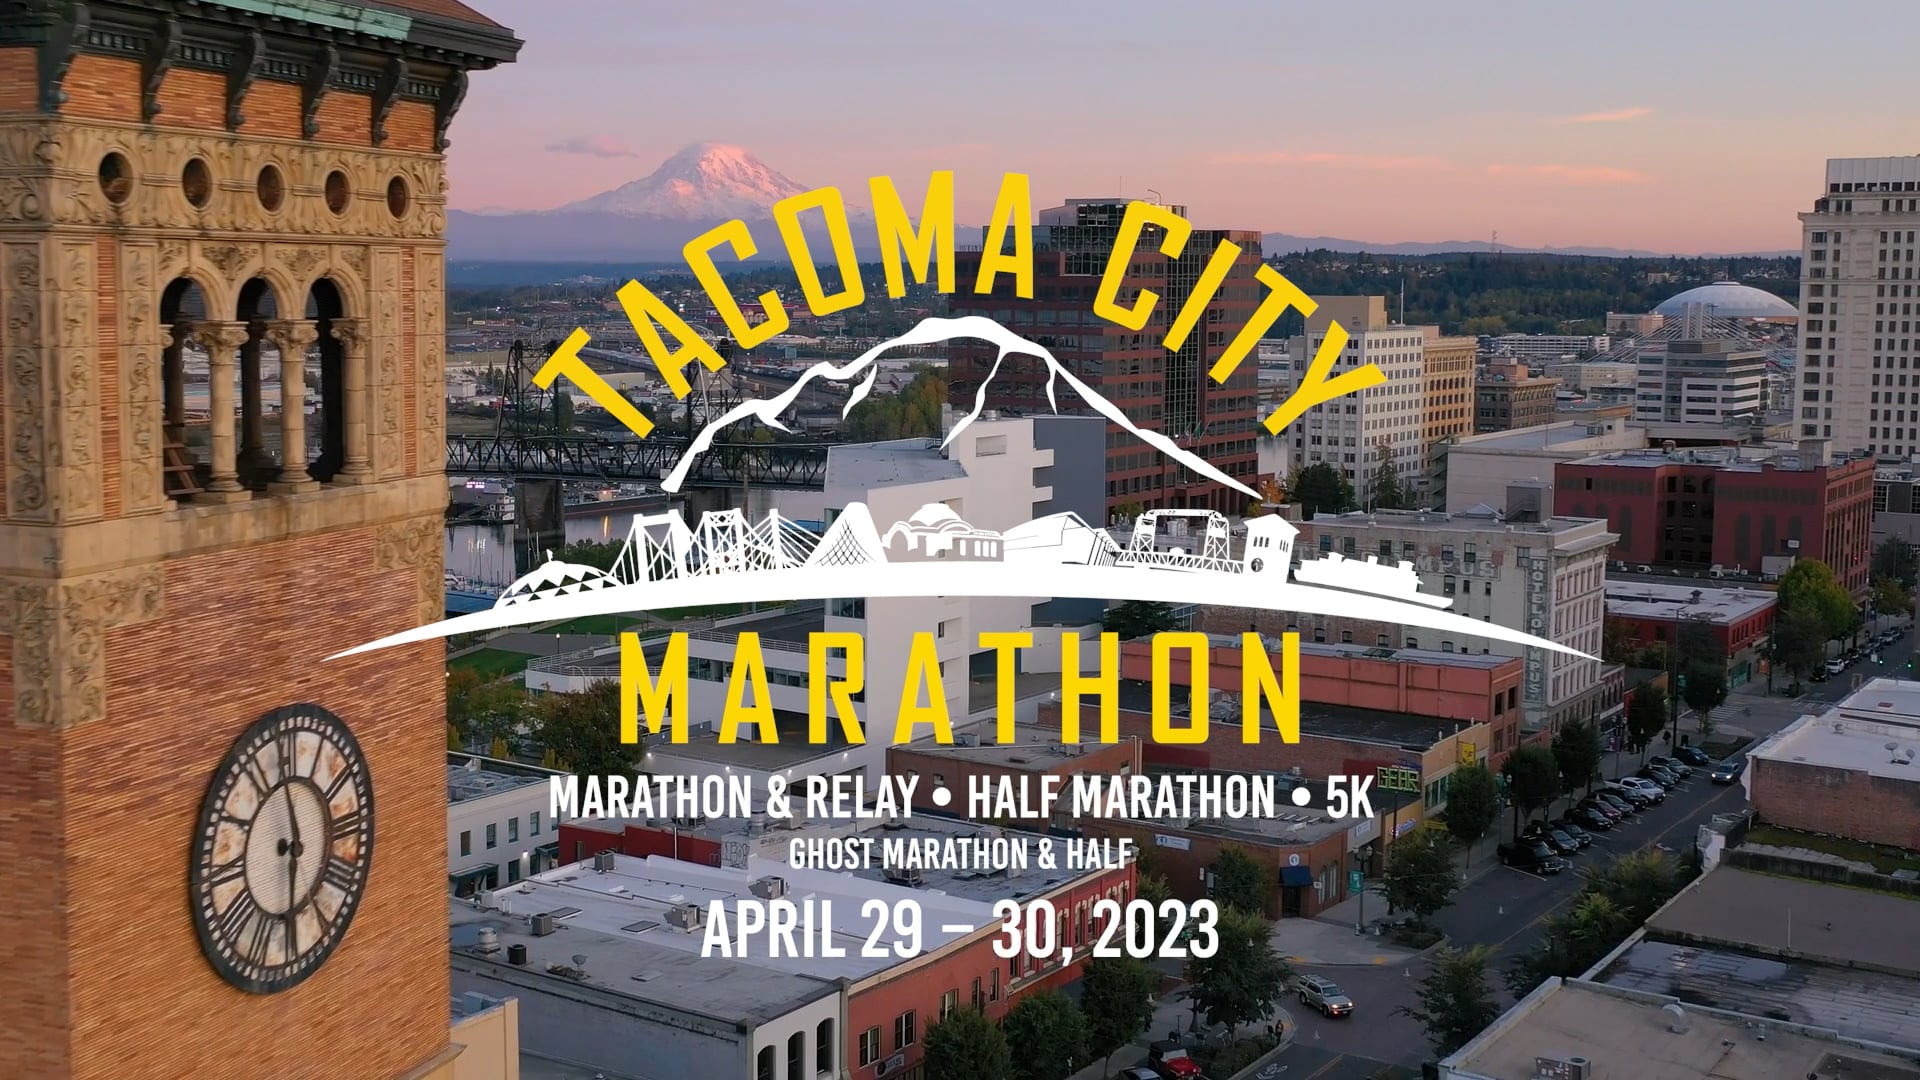 2023 City Marathon Finisher Medal Reveal on Vimeo